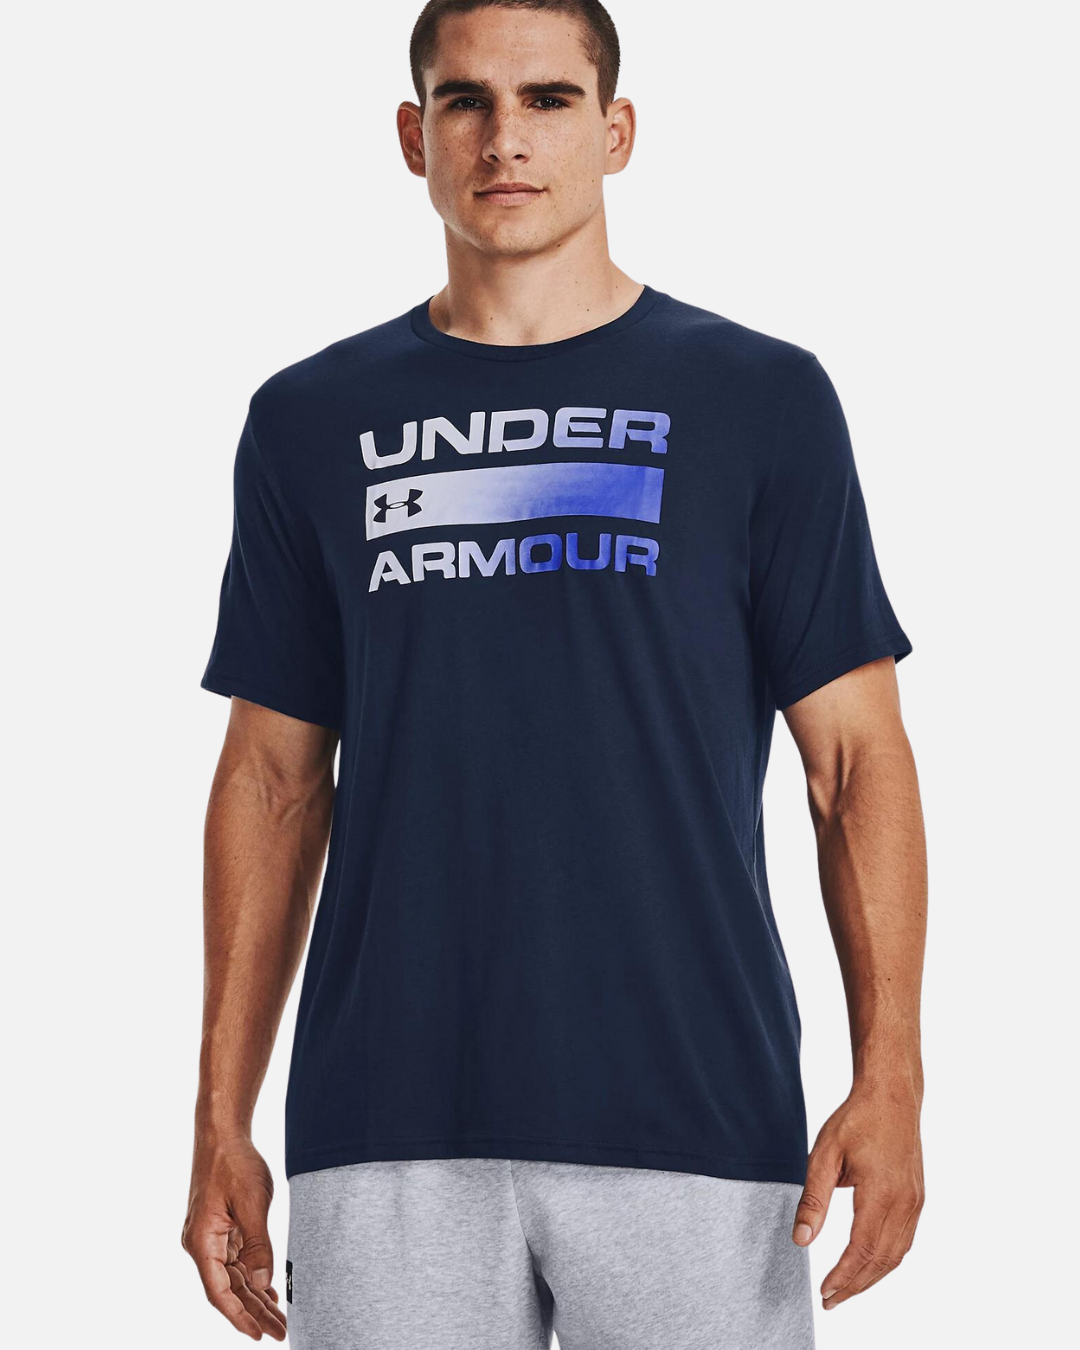 Under Armor Wordmark T-shirt - Blue